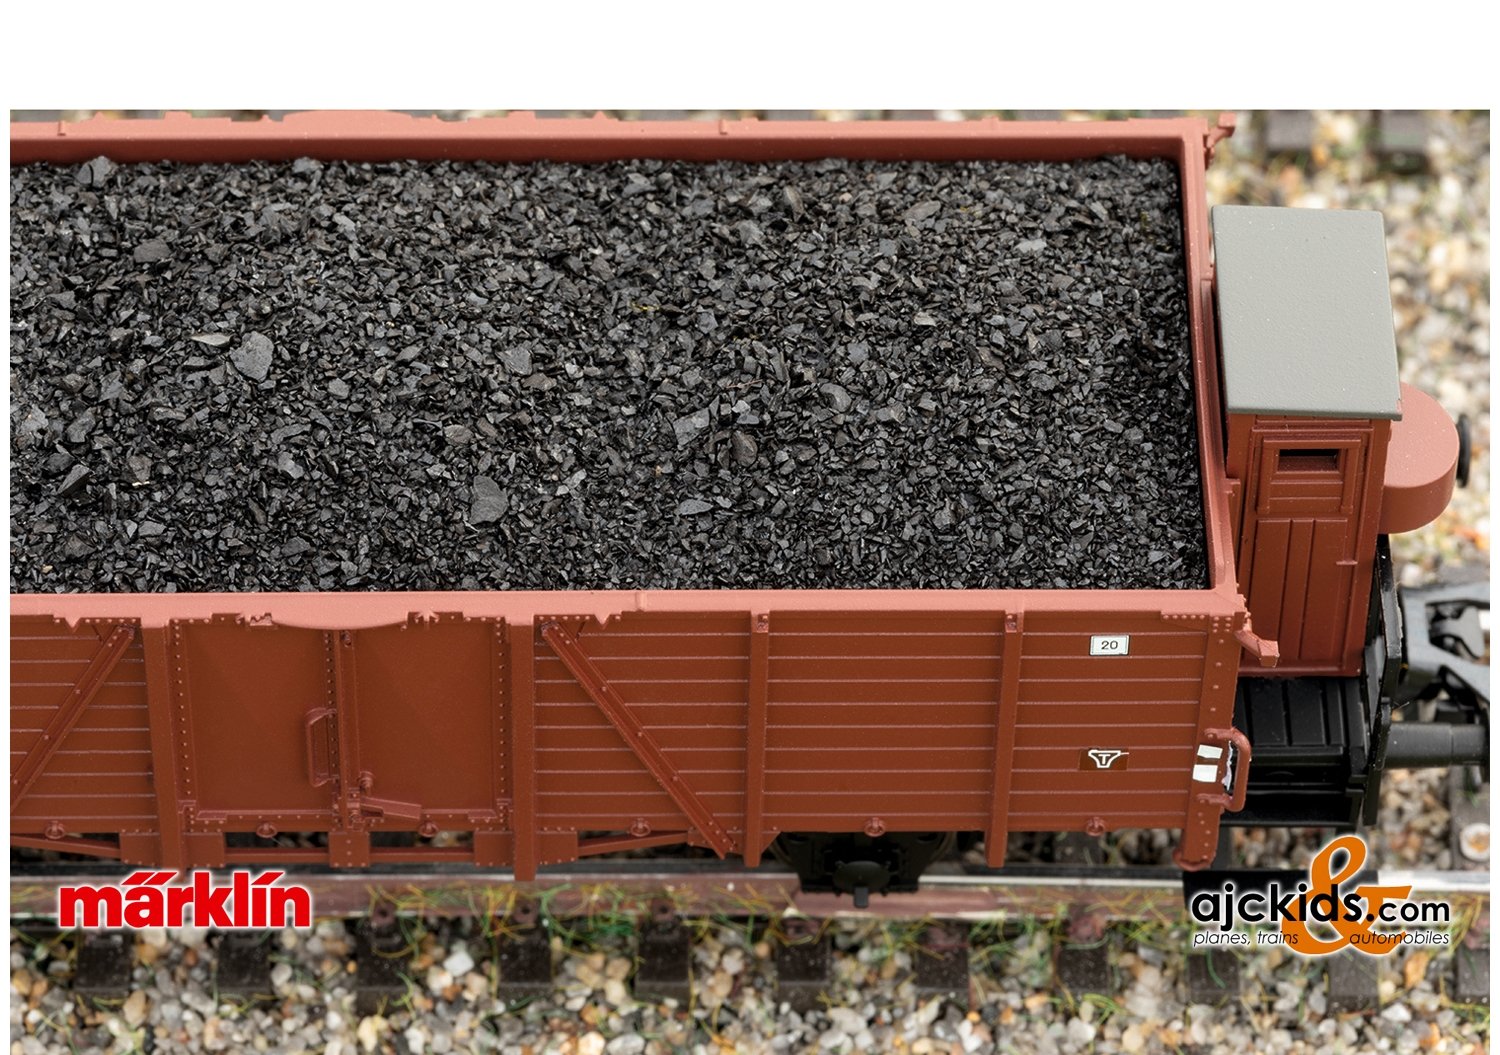 Marklin 46017 - Freight Car Set for the Class 95 Steam Locomotive